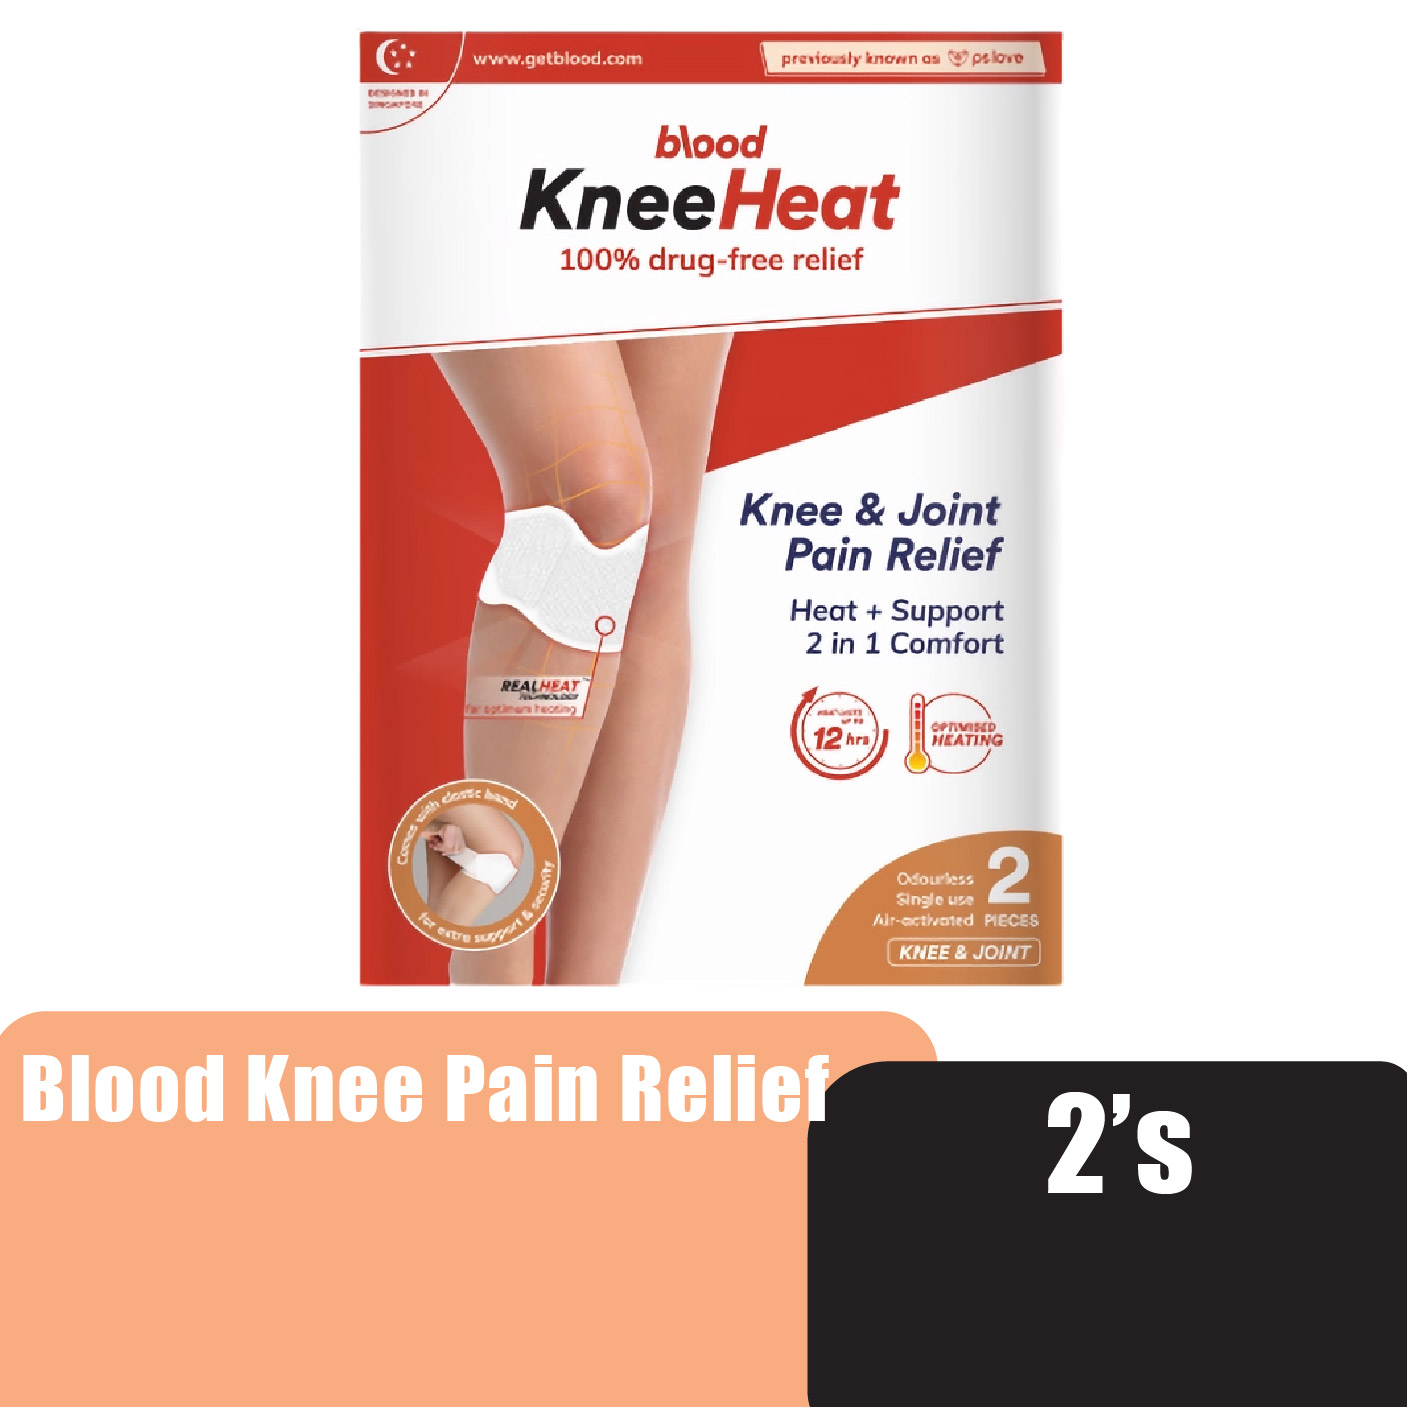 Blood Knee Pain Relief 2's